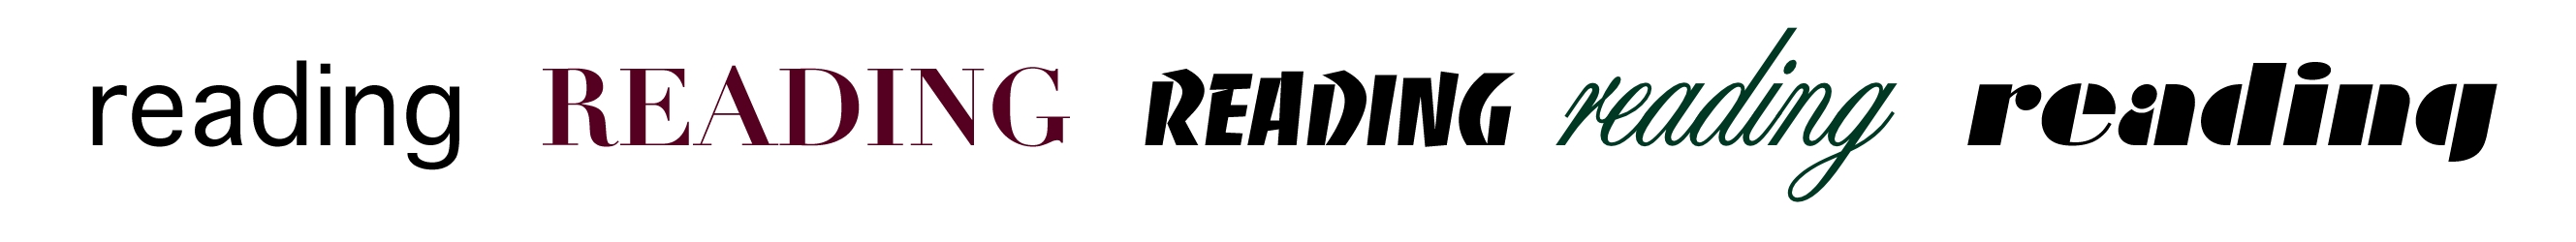 reading5x.jpg